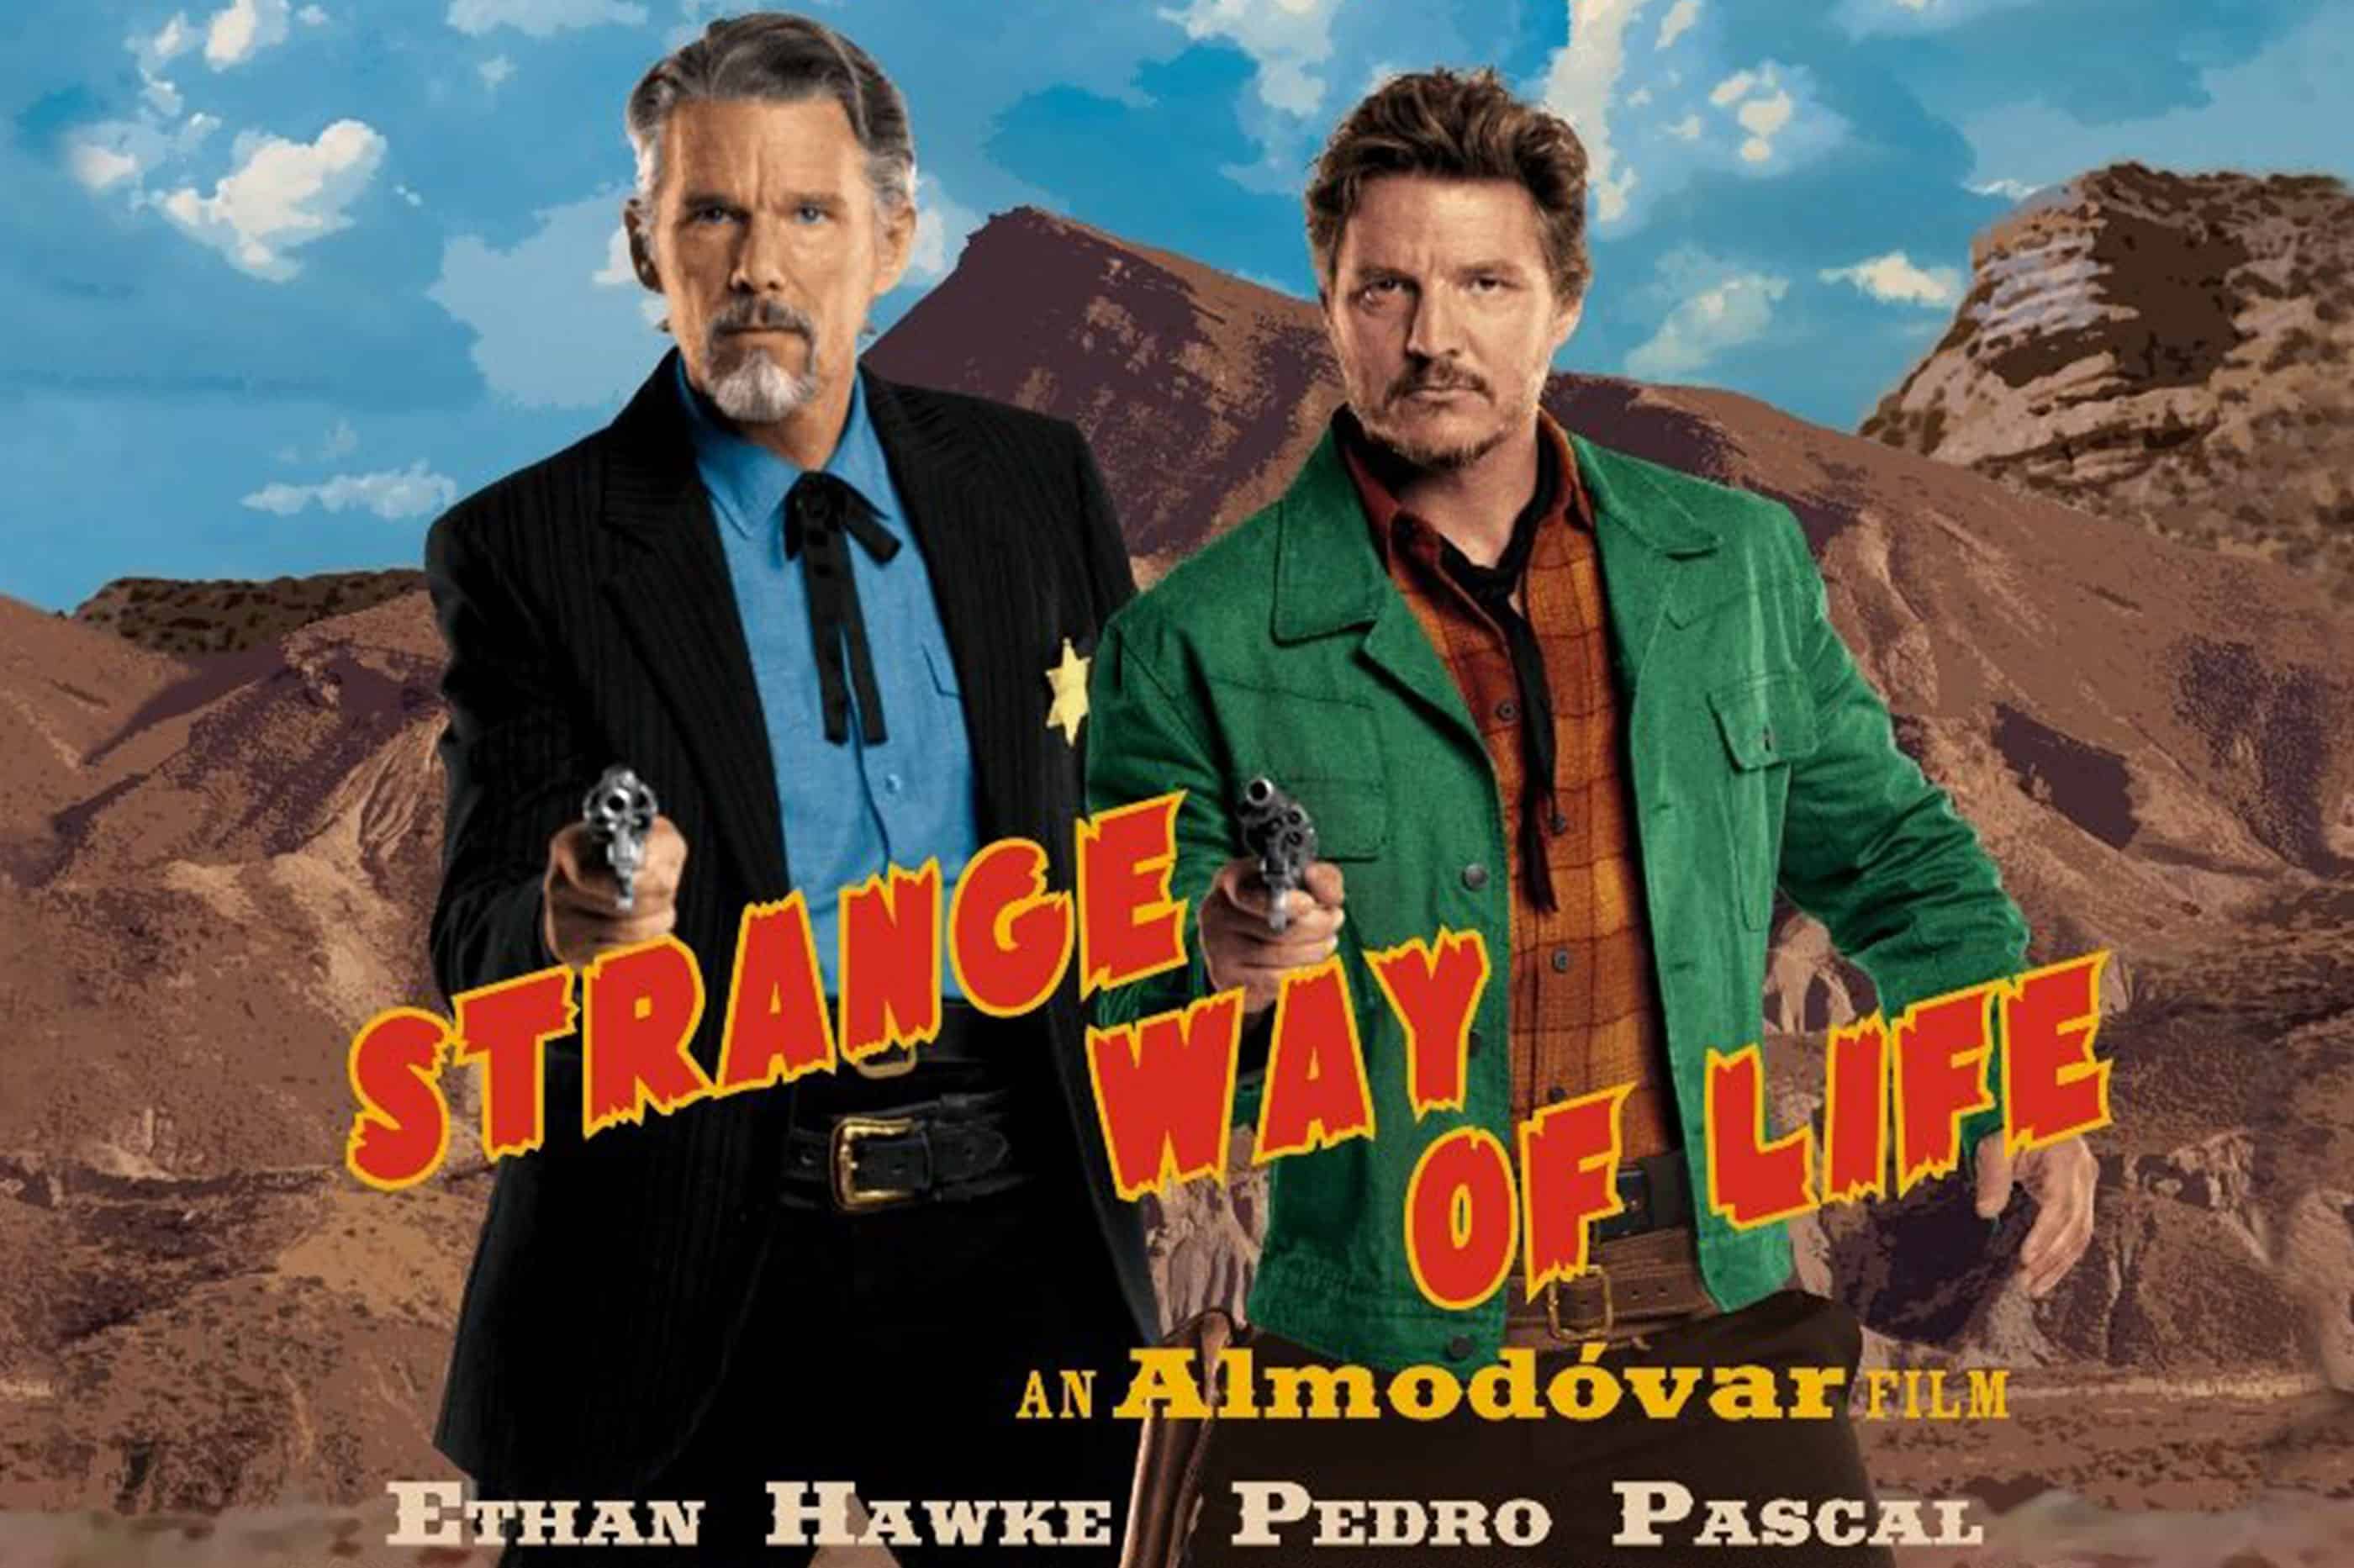 Pedro Almodovar's 'Strange Way of Life' film to premiere at Cannes.